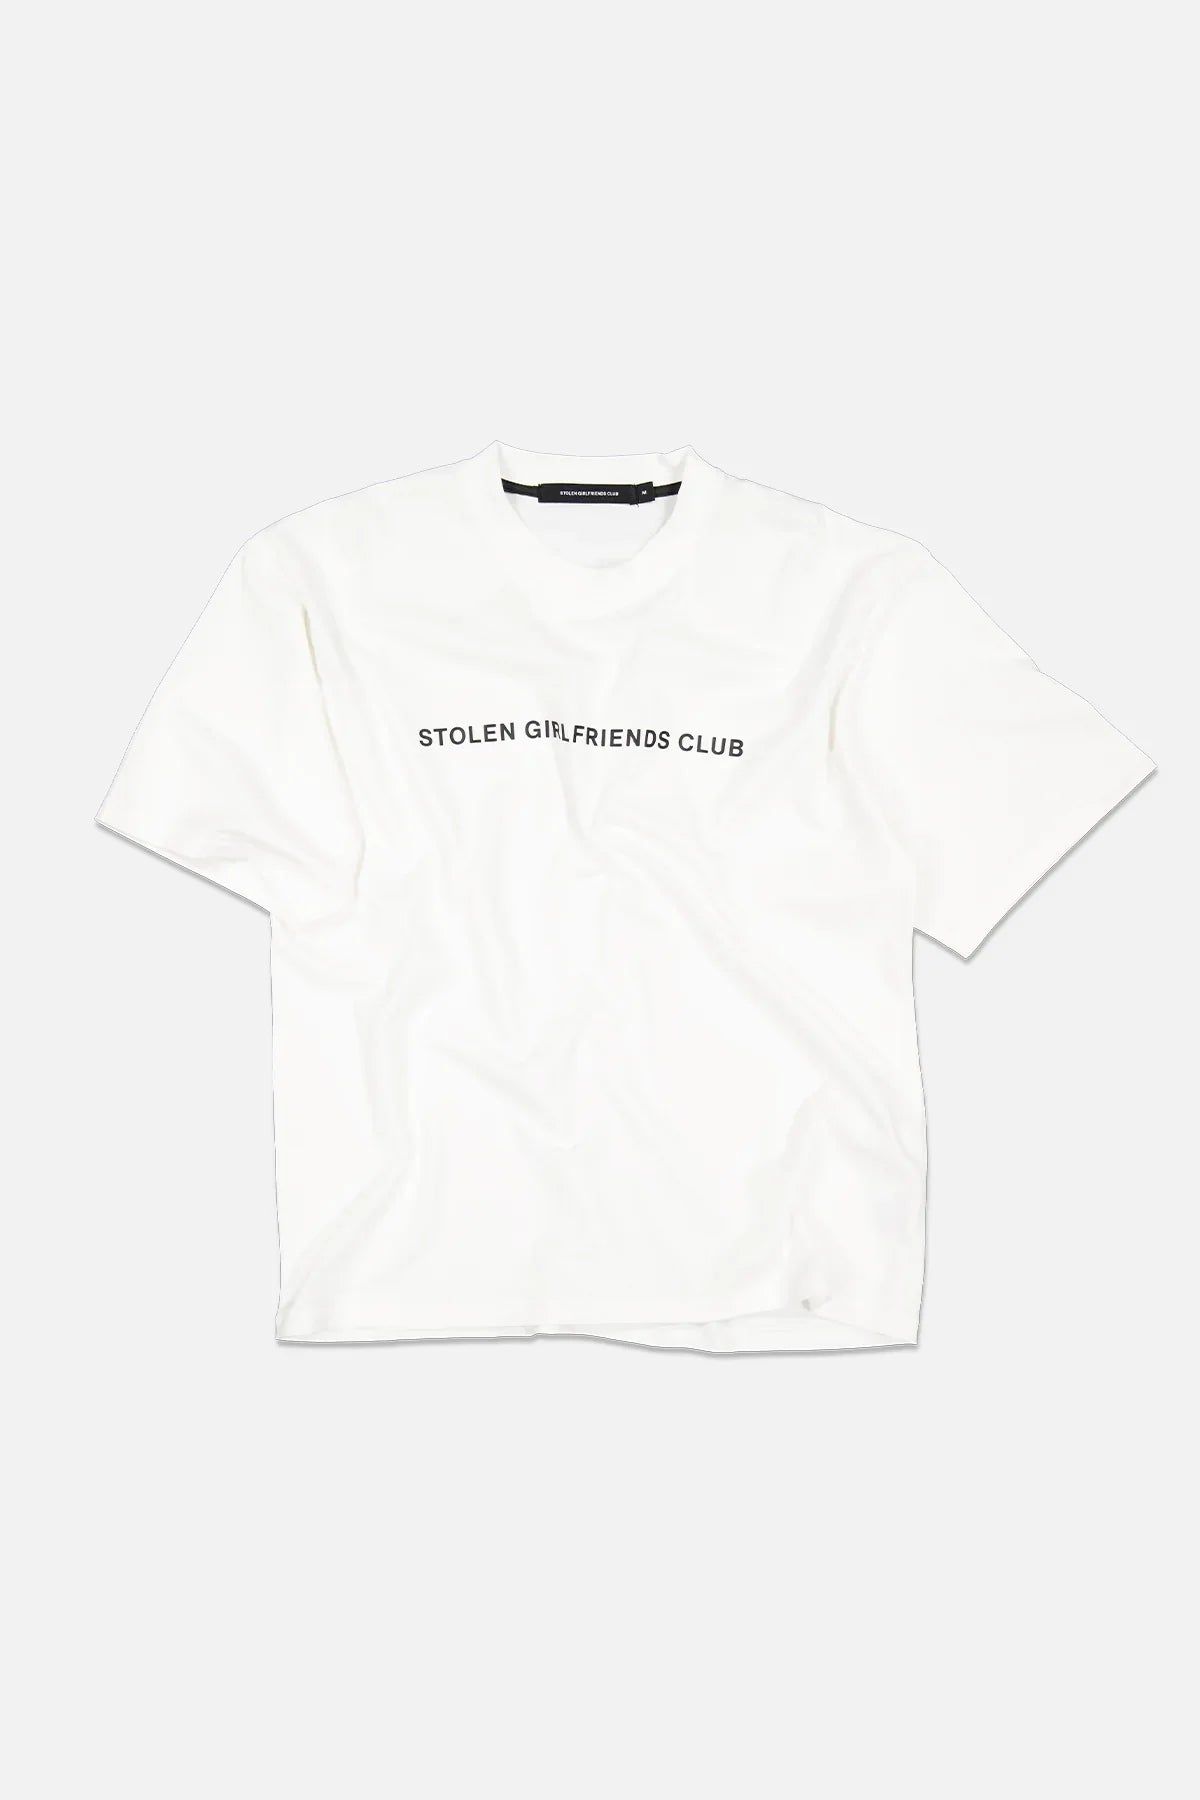 STOLEN GIRLFRIENDS CLUB // Text Logo Tee WHITE